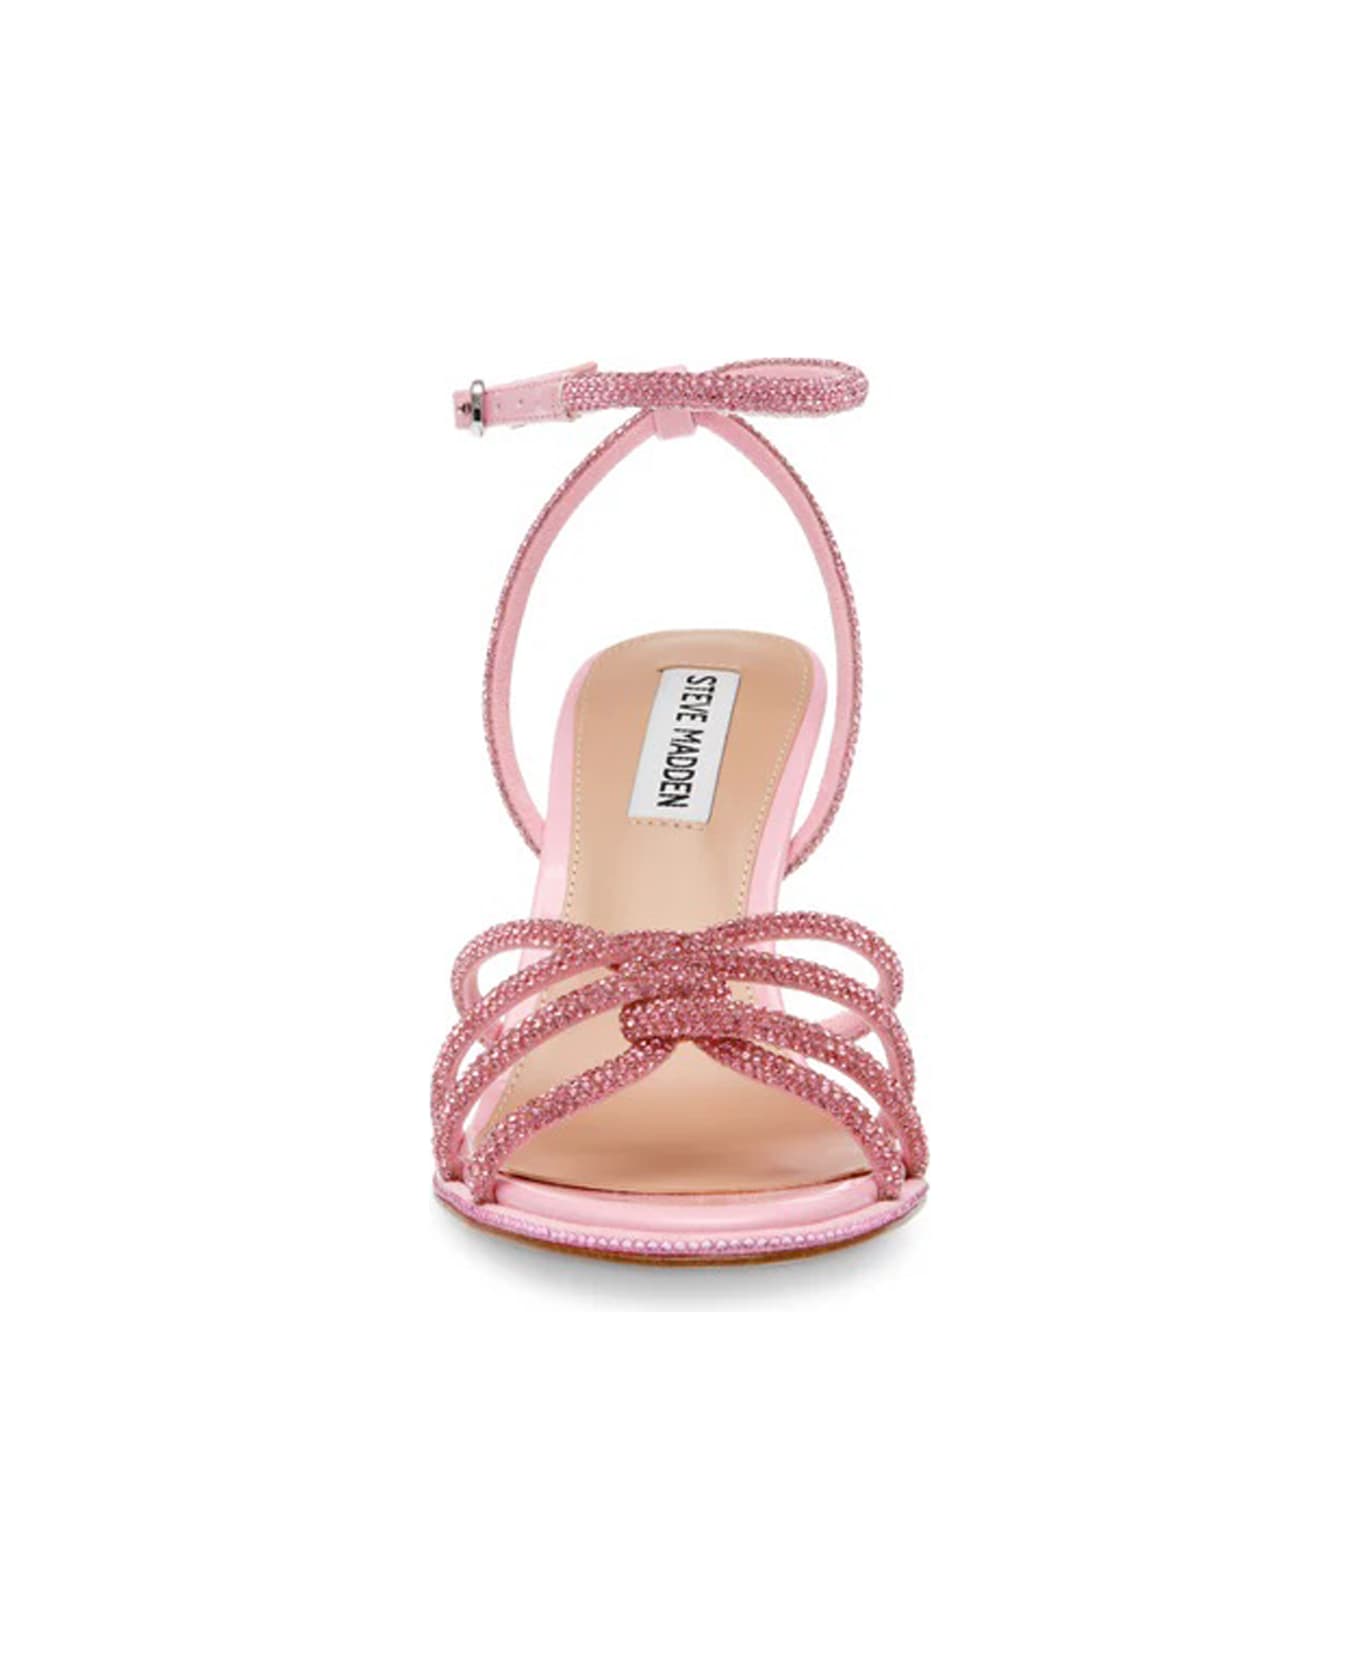 Steve Madden Heeled Sandals - Pink サンダル